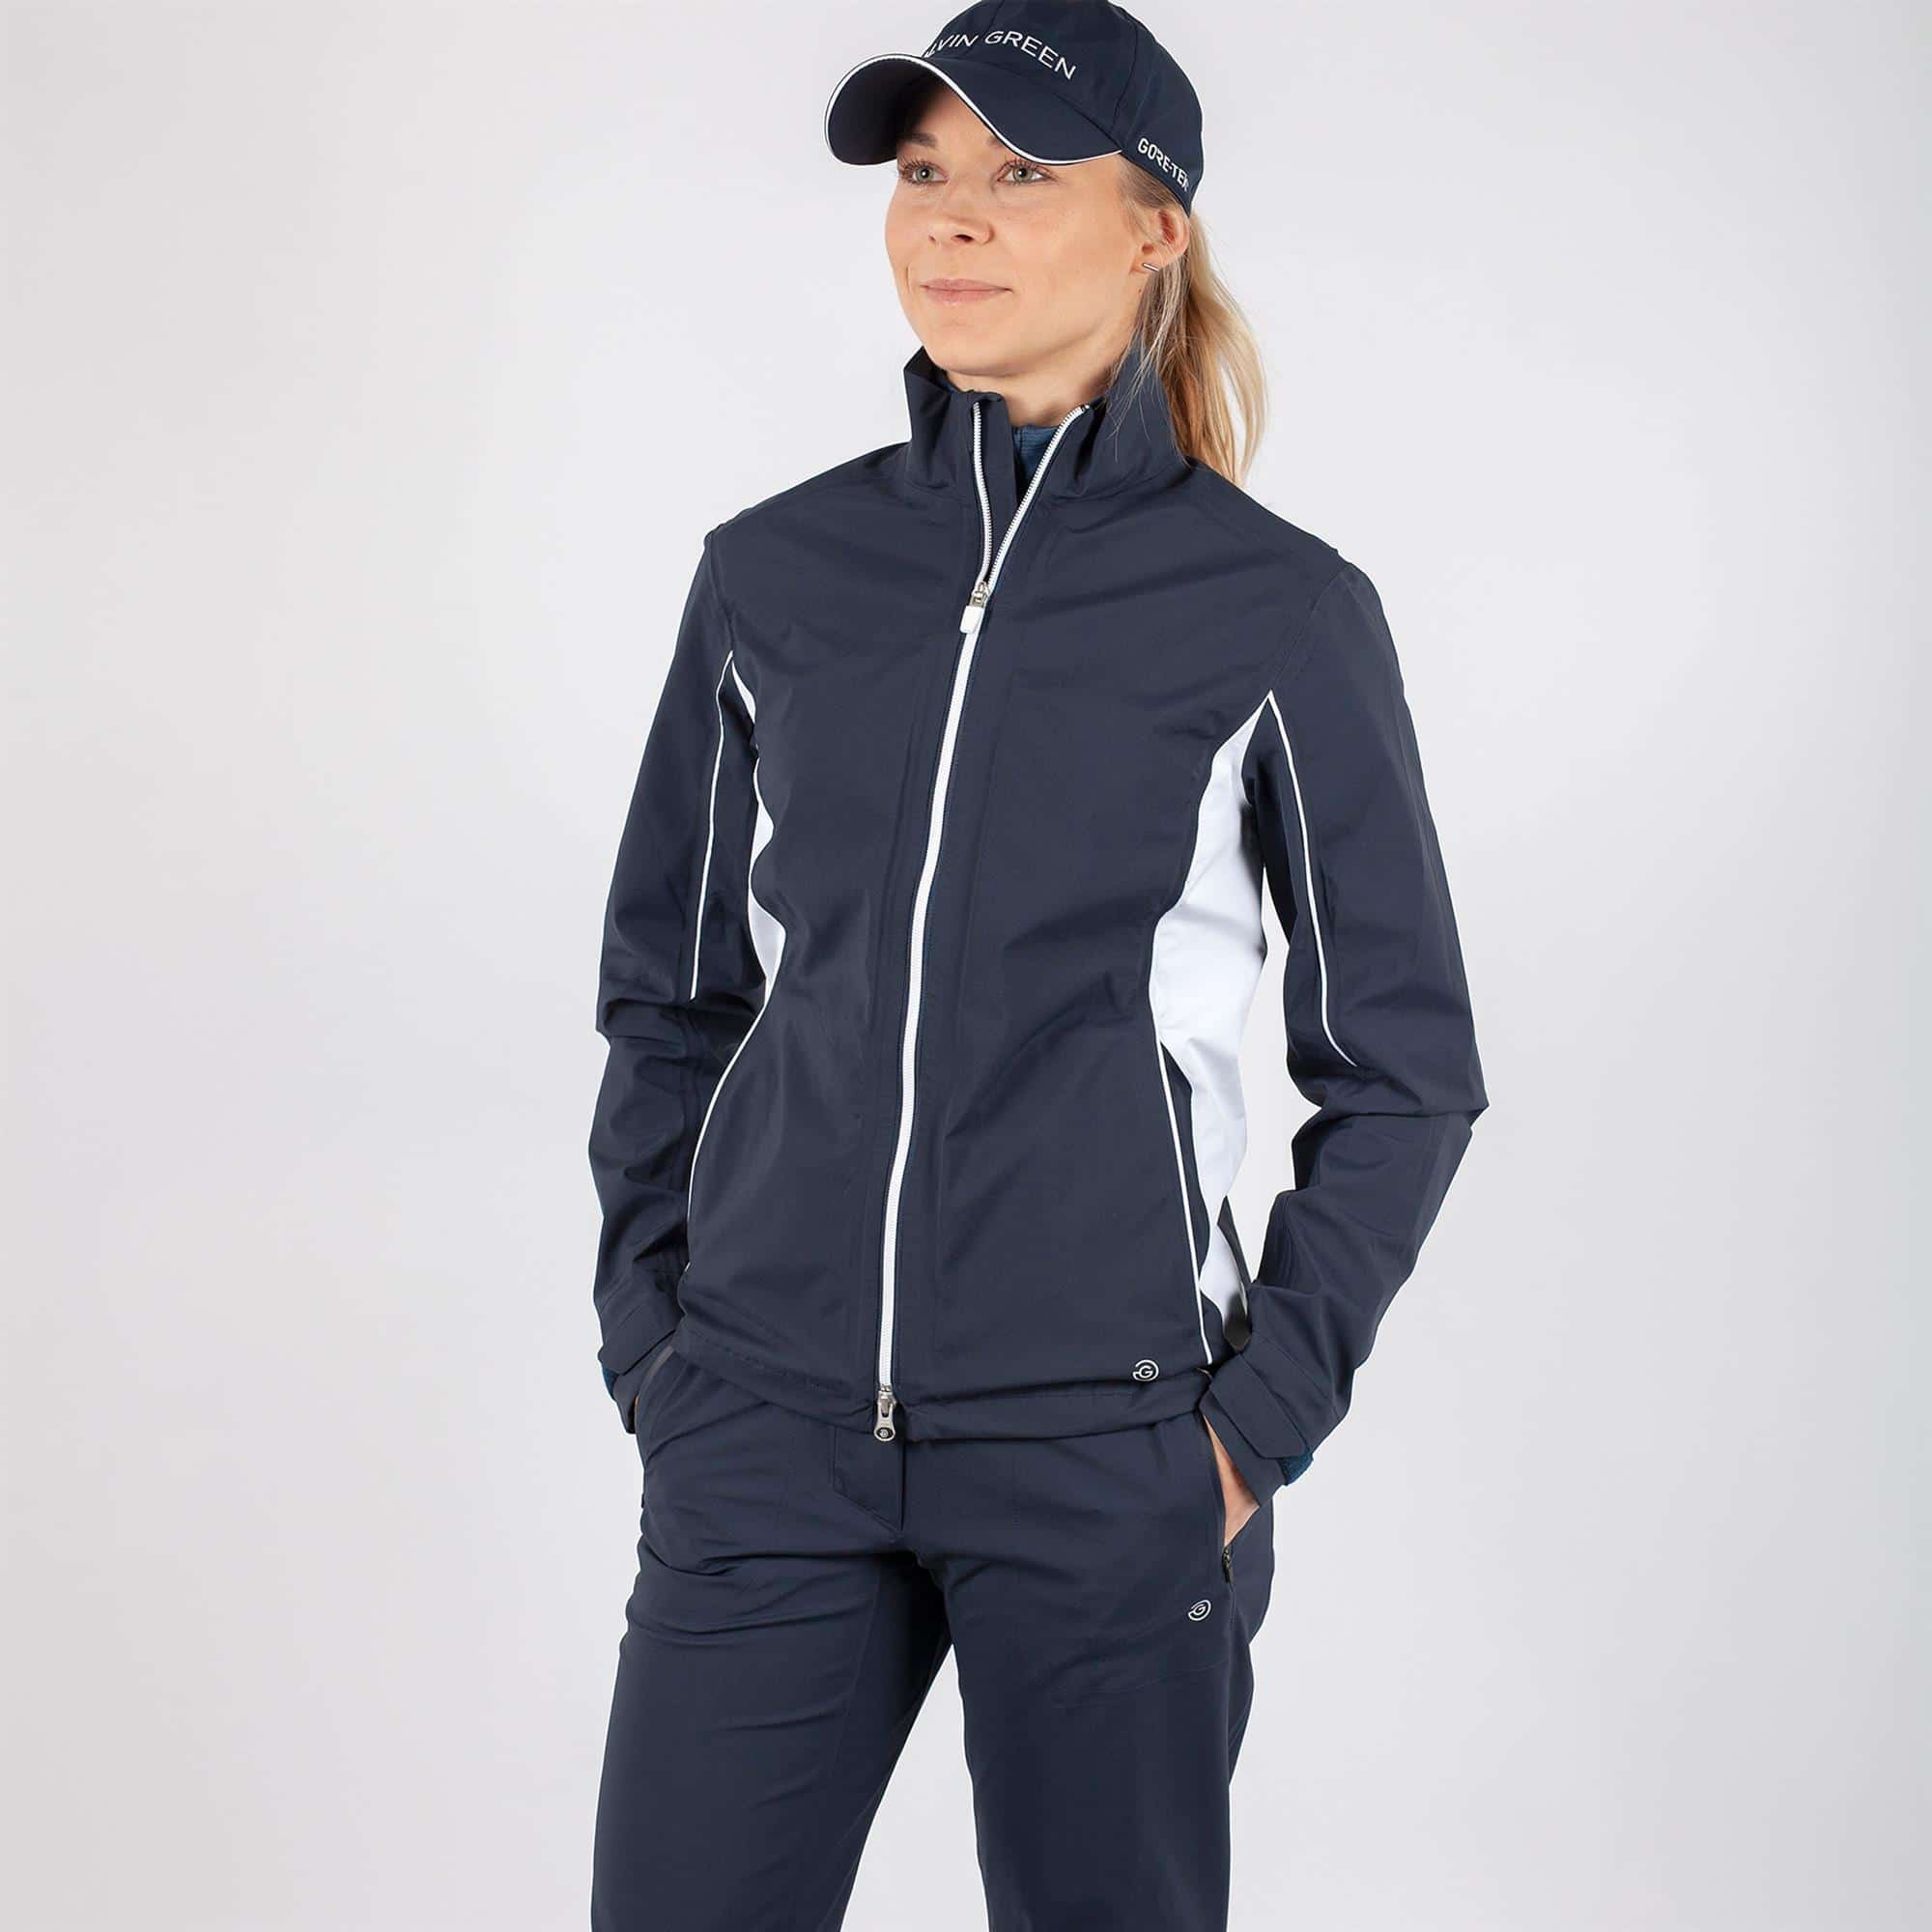 Galvin Green Aila Gore-Tex Paclite Waterproof Ladies Golf Jacket Navy/White